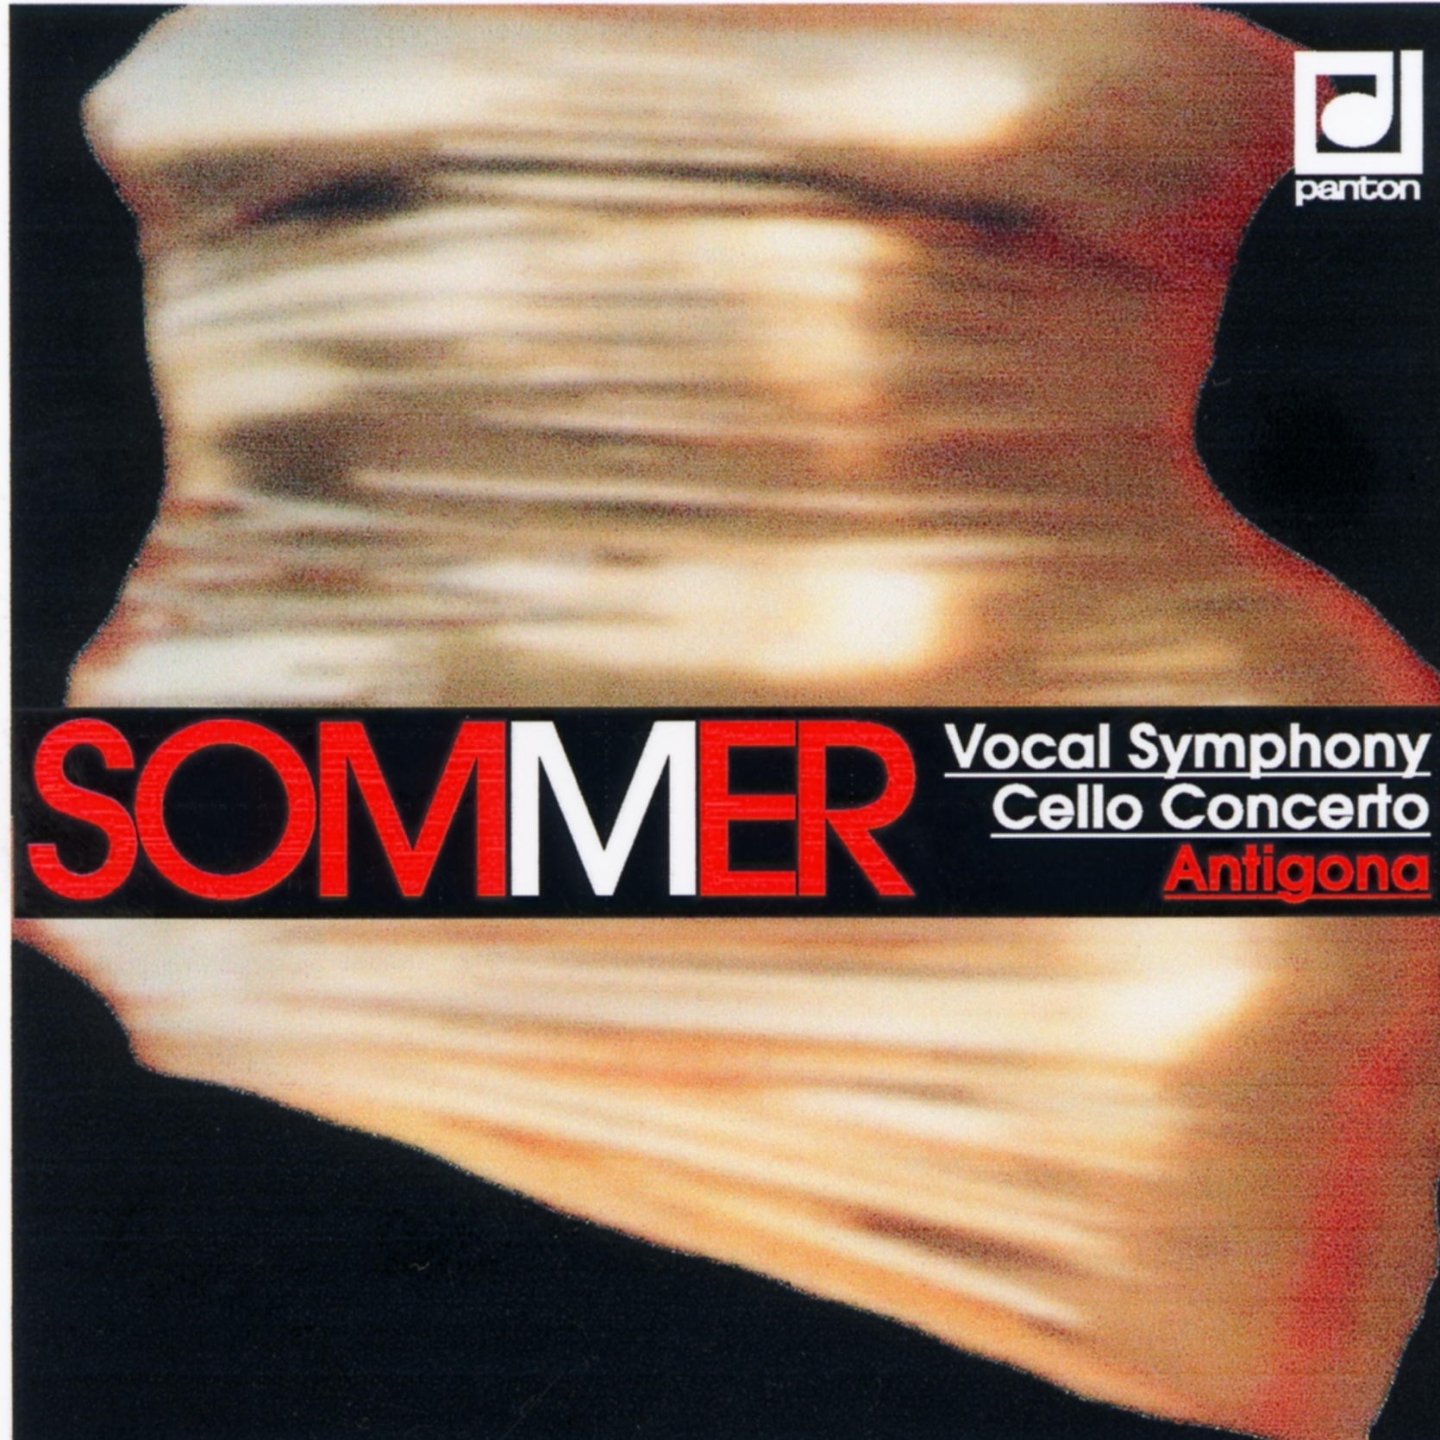 Vocal Symphony for Mezzo-Soprano, Speaker, Chorus and Large Orchestra: I. At Night .Con moto - Adagio - Piu lento - Adagio